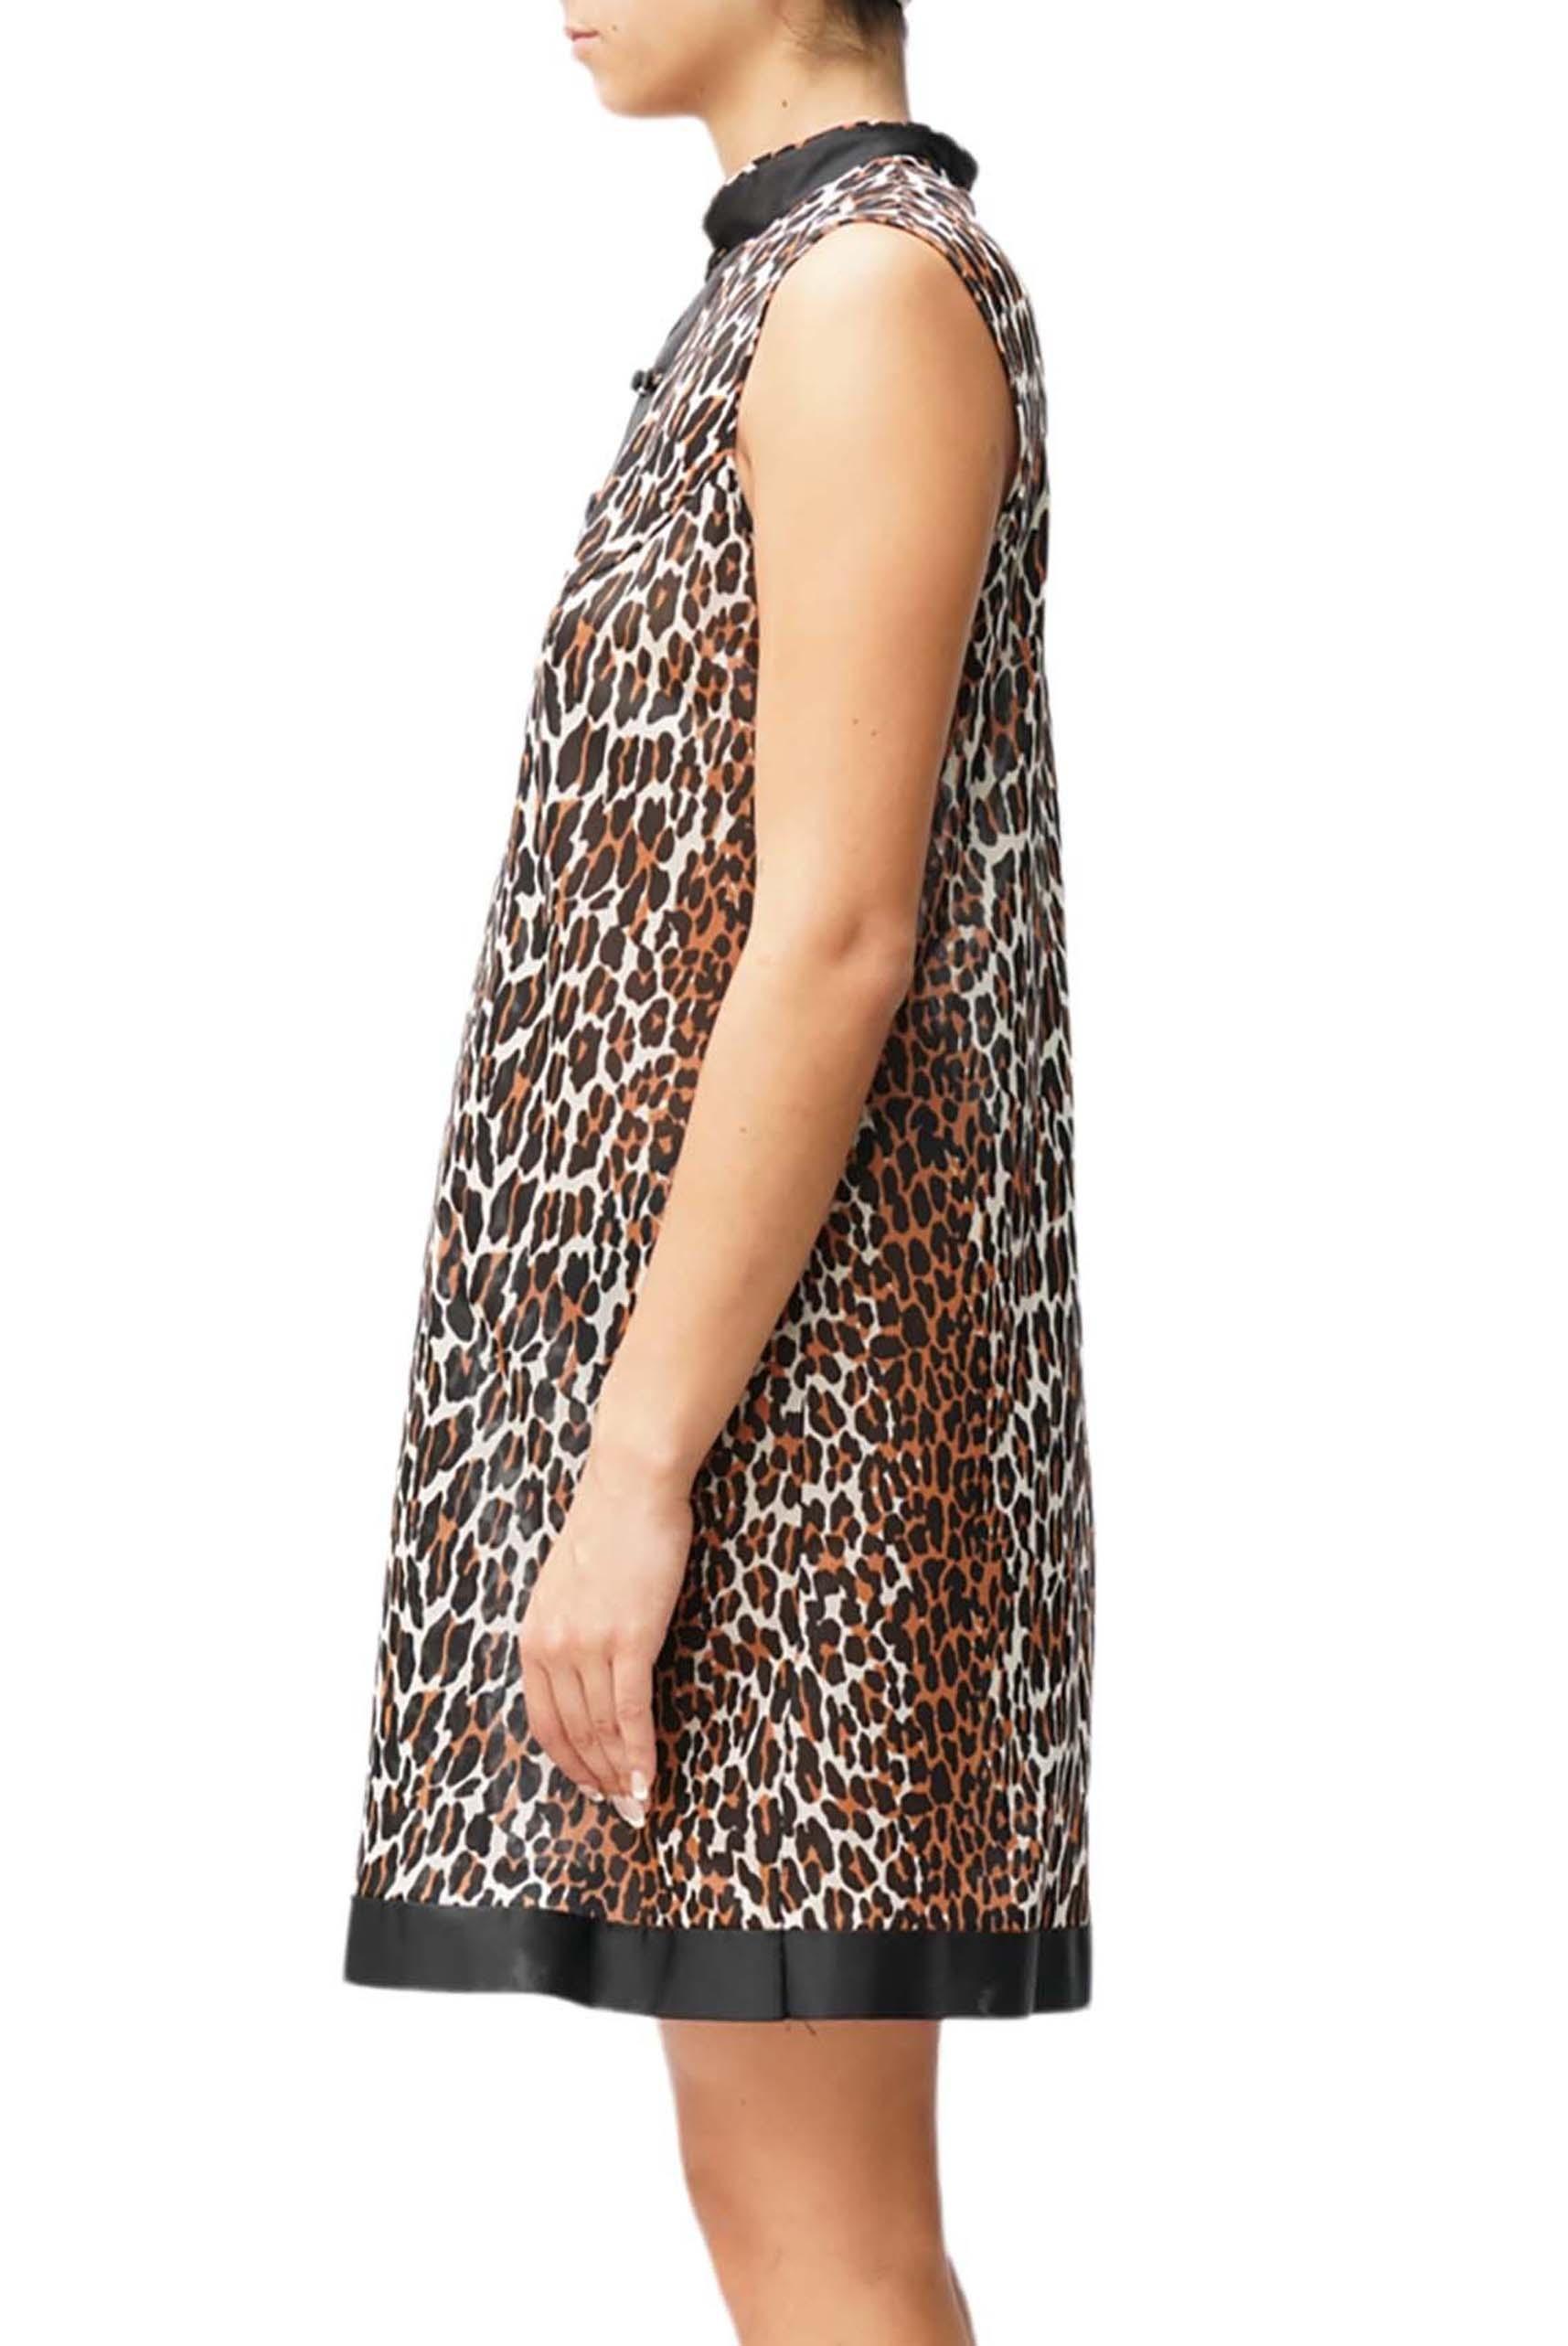 Women's 1960S Leopard Print Nylon Tricot Jersey Mod Slip Dress Negligee For Sale